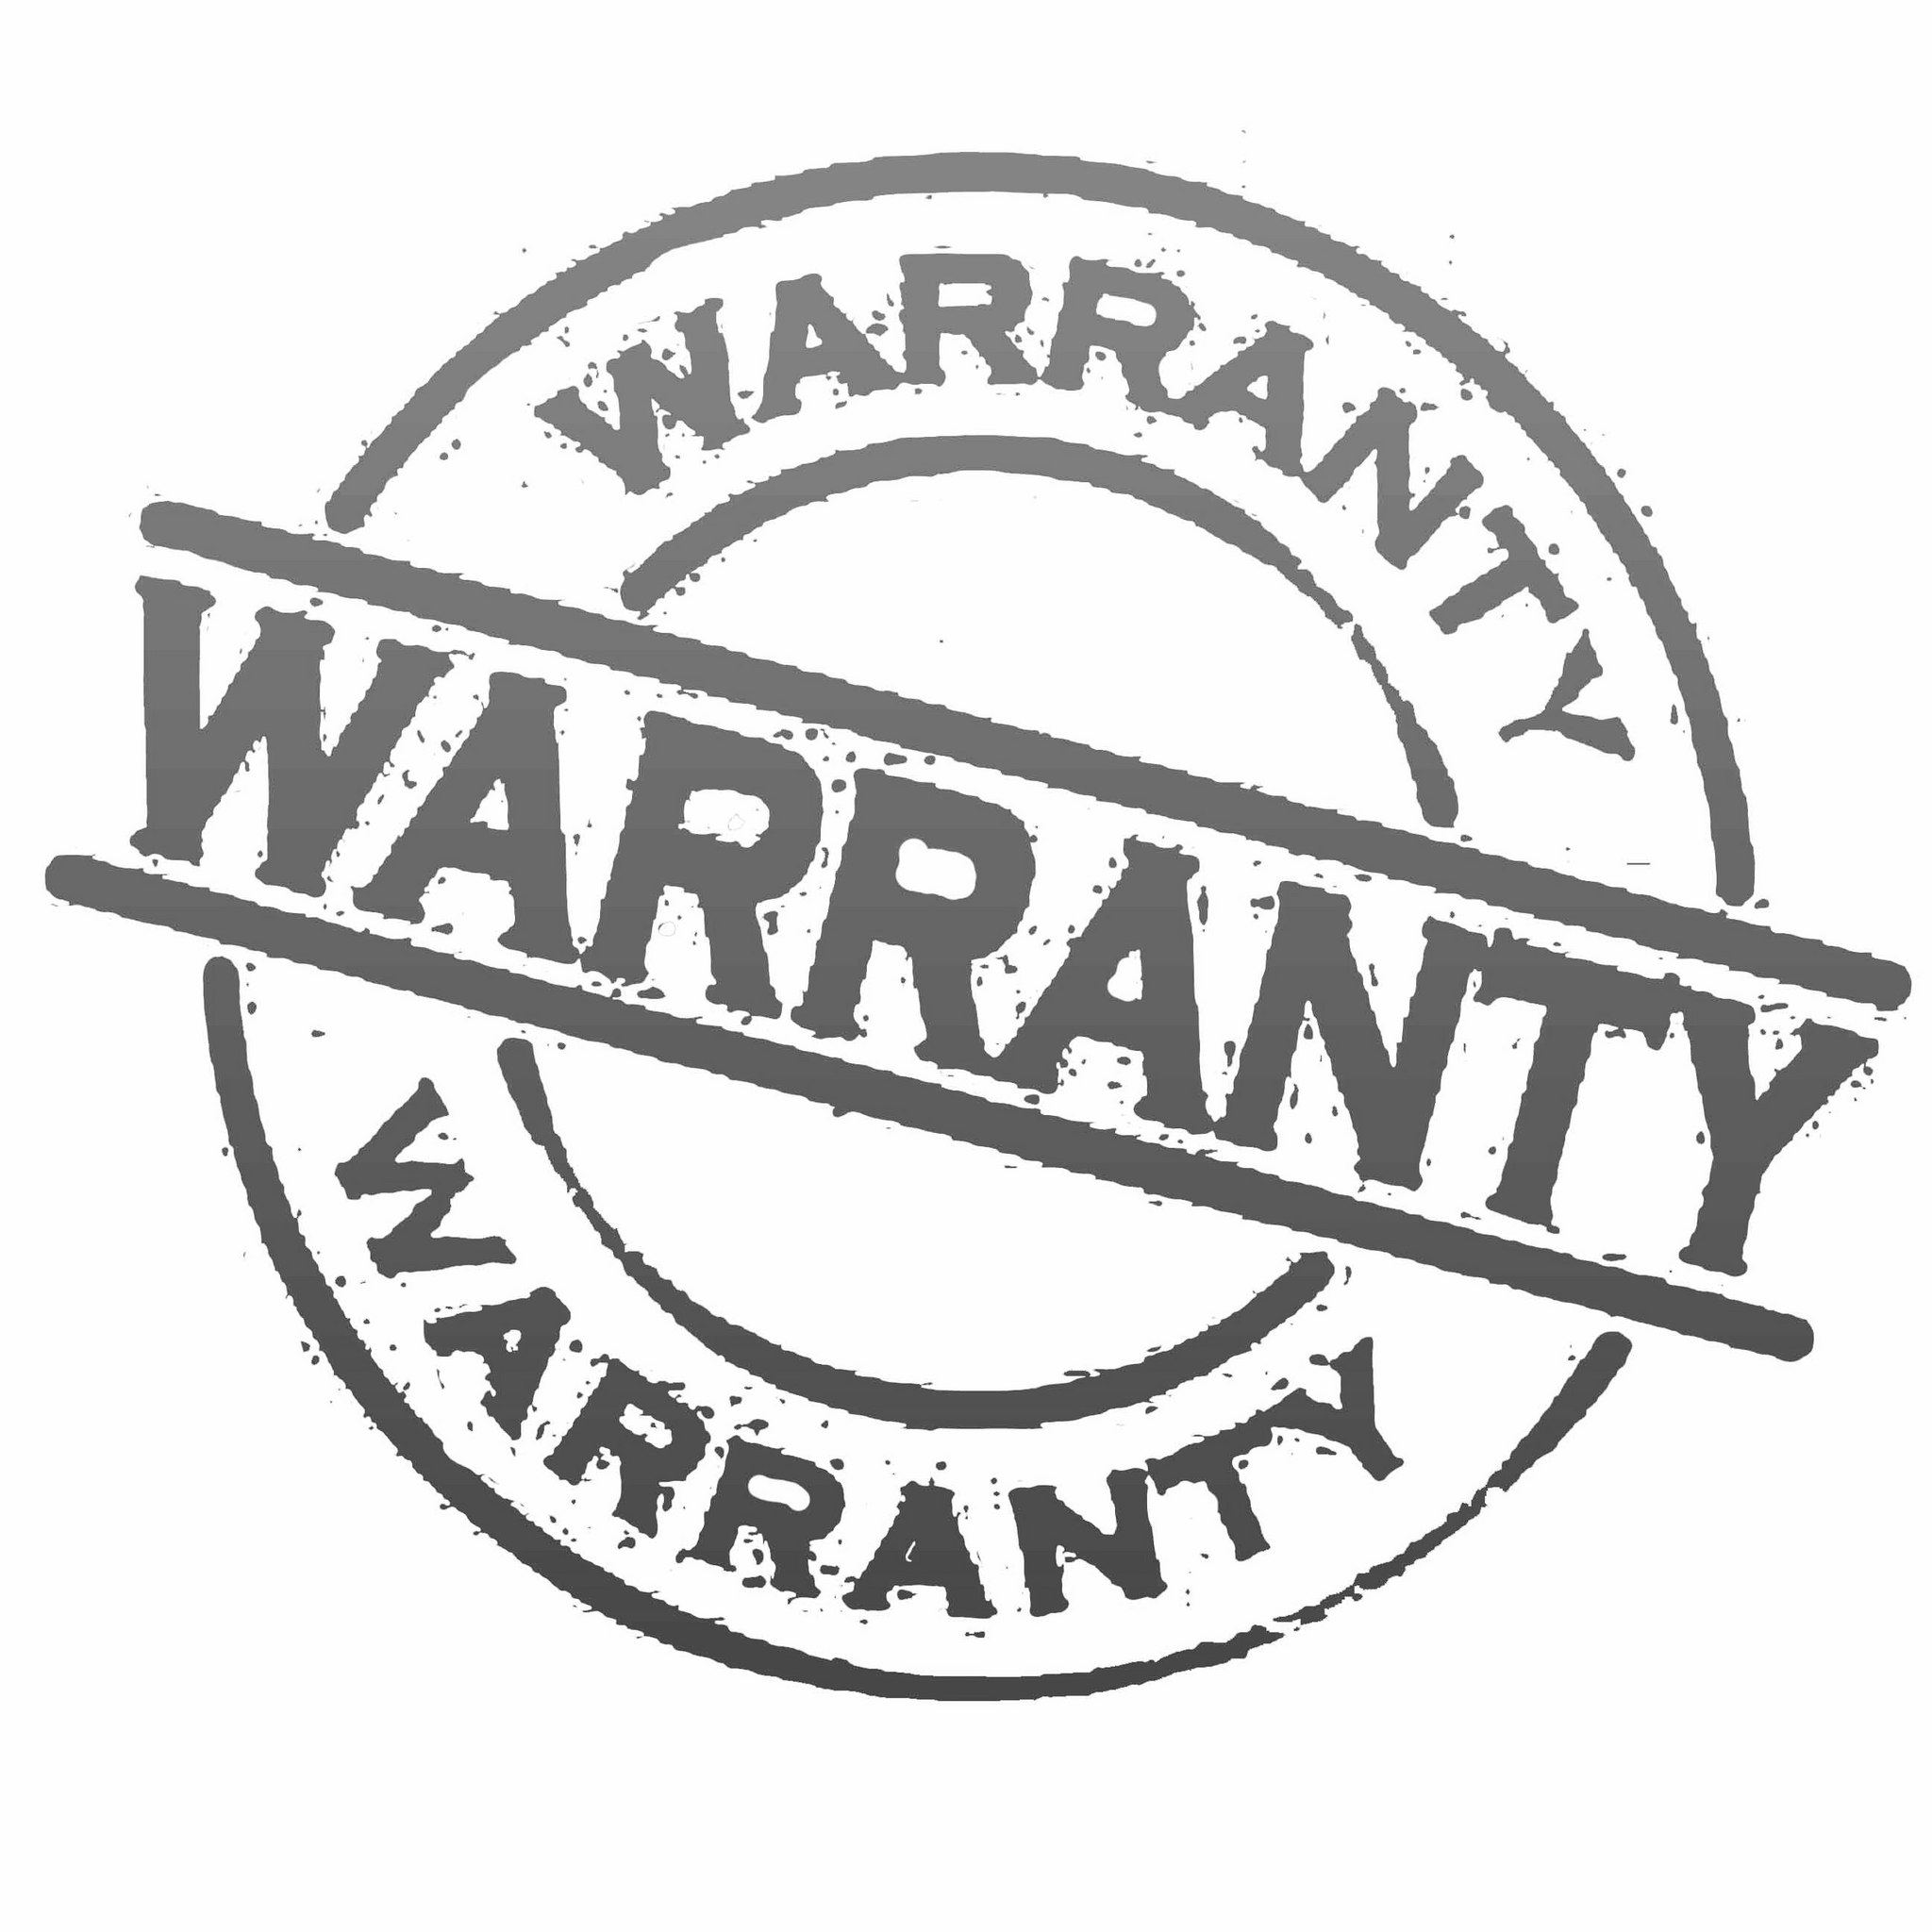 2-Year Extended Warranty